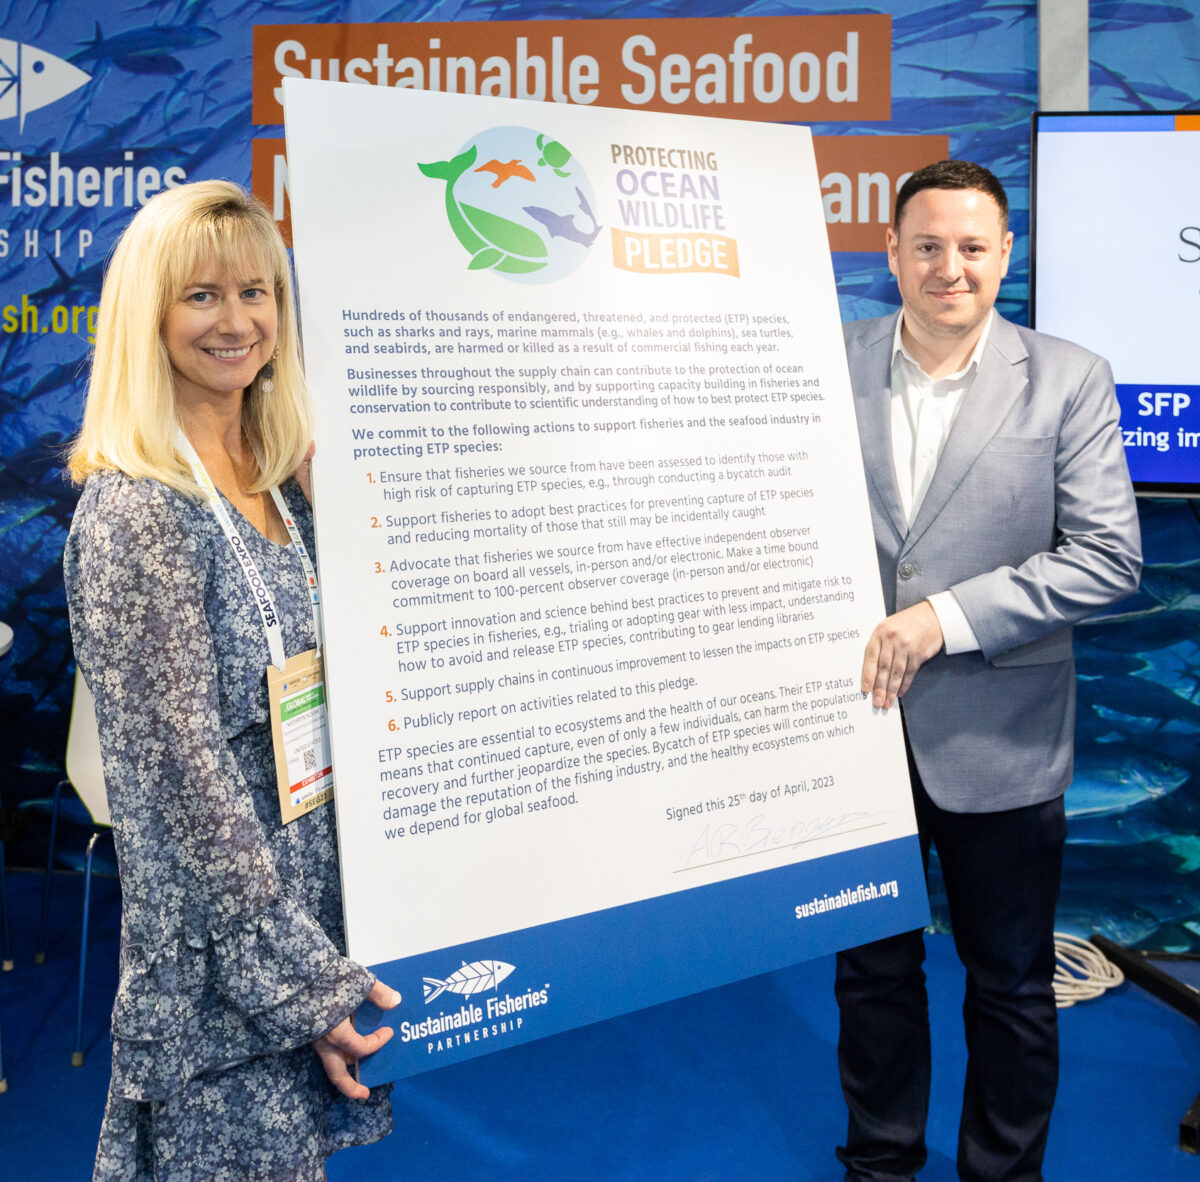 Kathryn Novak and Adam Brennan with Protecting Ocean Wildlife pledge